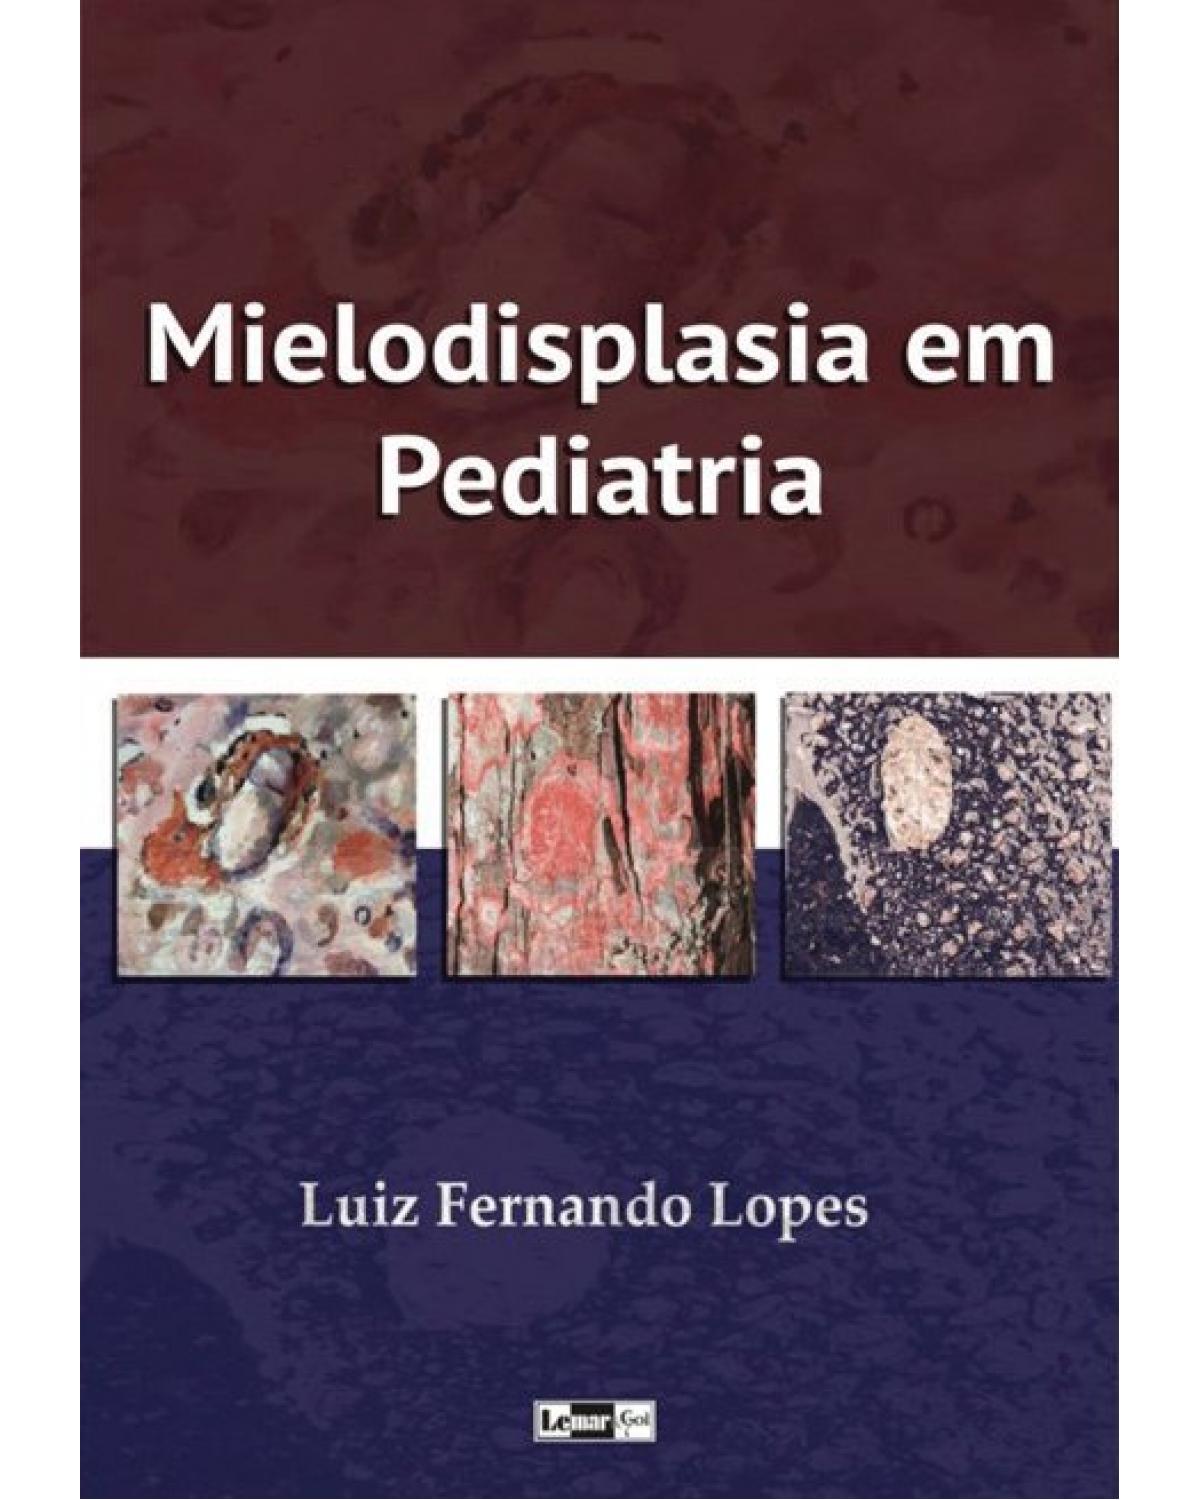 Mielodisplasia em pediatria - Volume 1:  - 1ª Edição | 2019